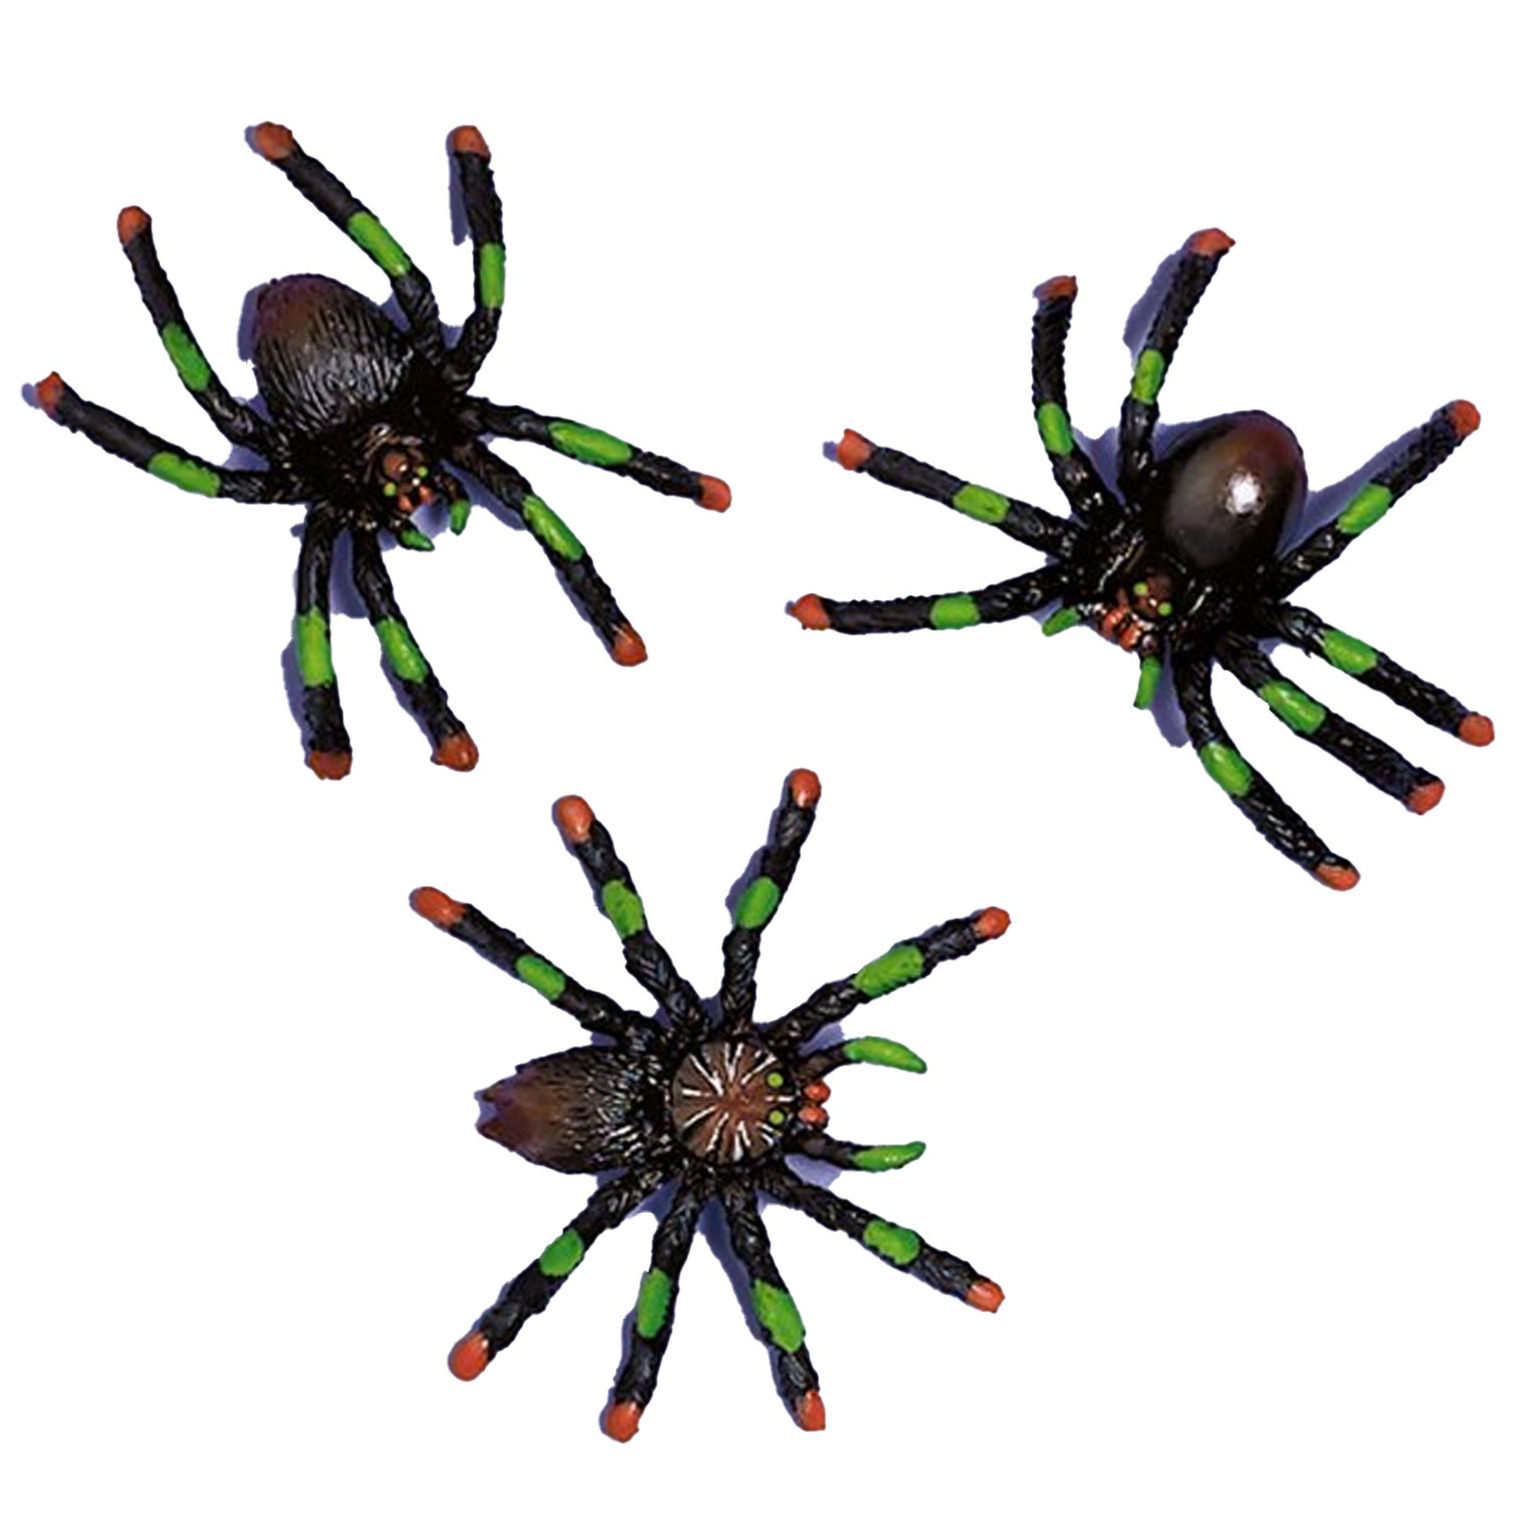 Nep spinnen/spinnetjes 5 x 4 cm - zwart - 16x stuks - Horror/griezel thema decoratie beestjes